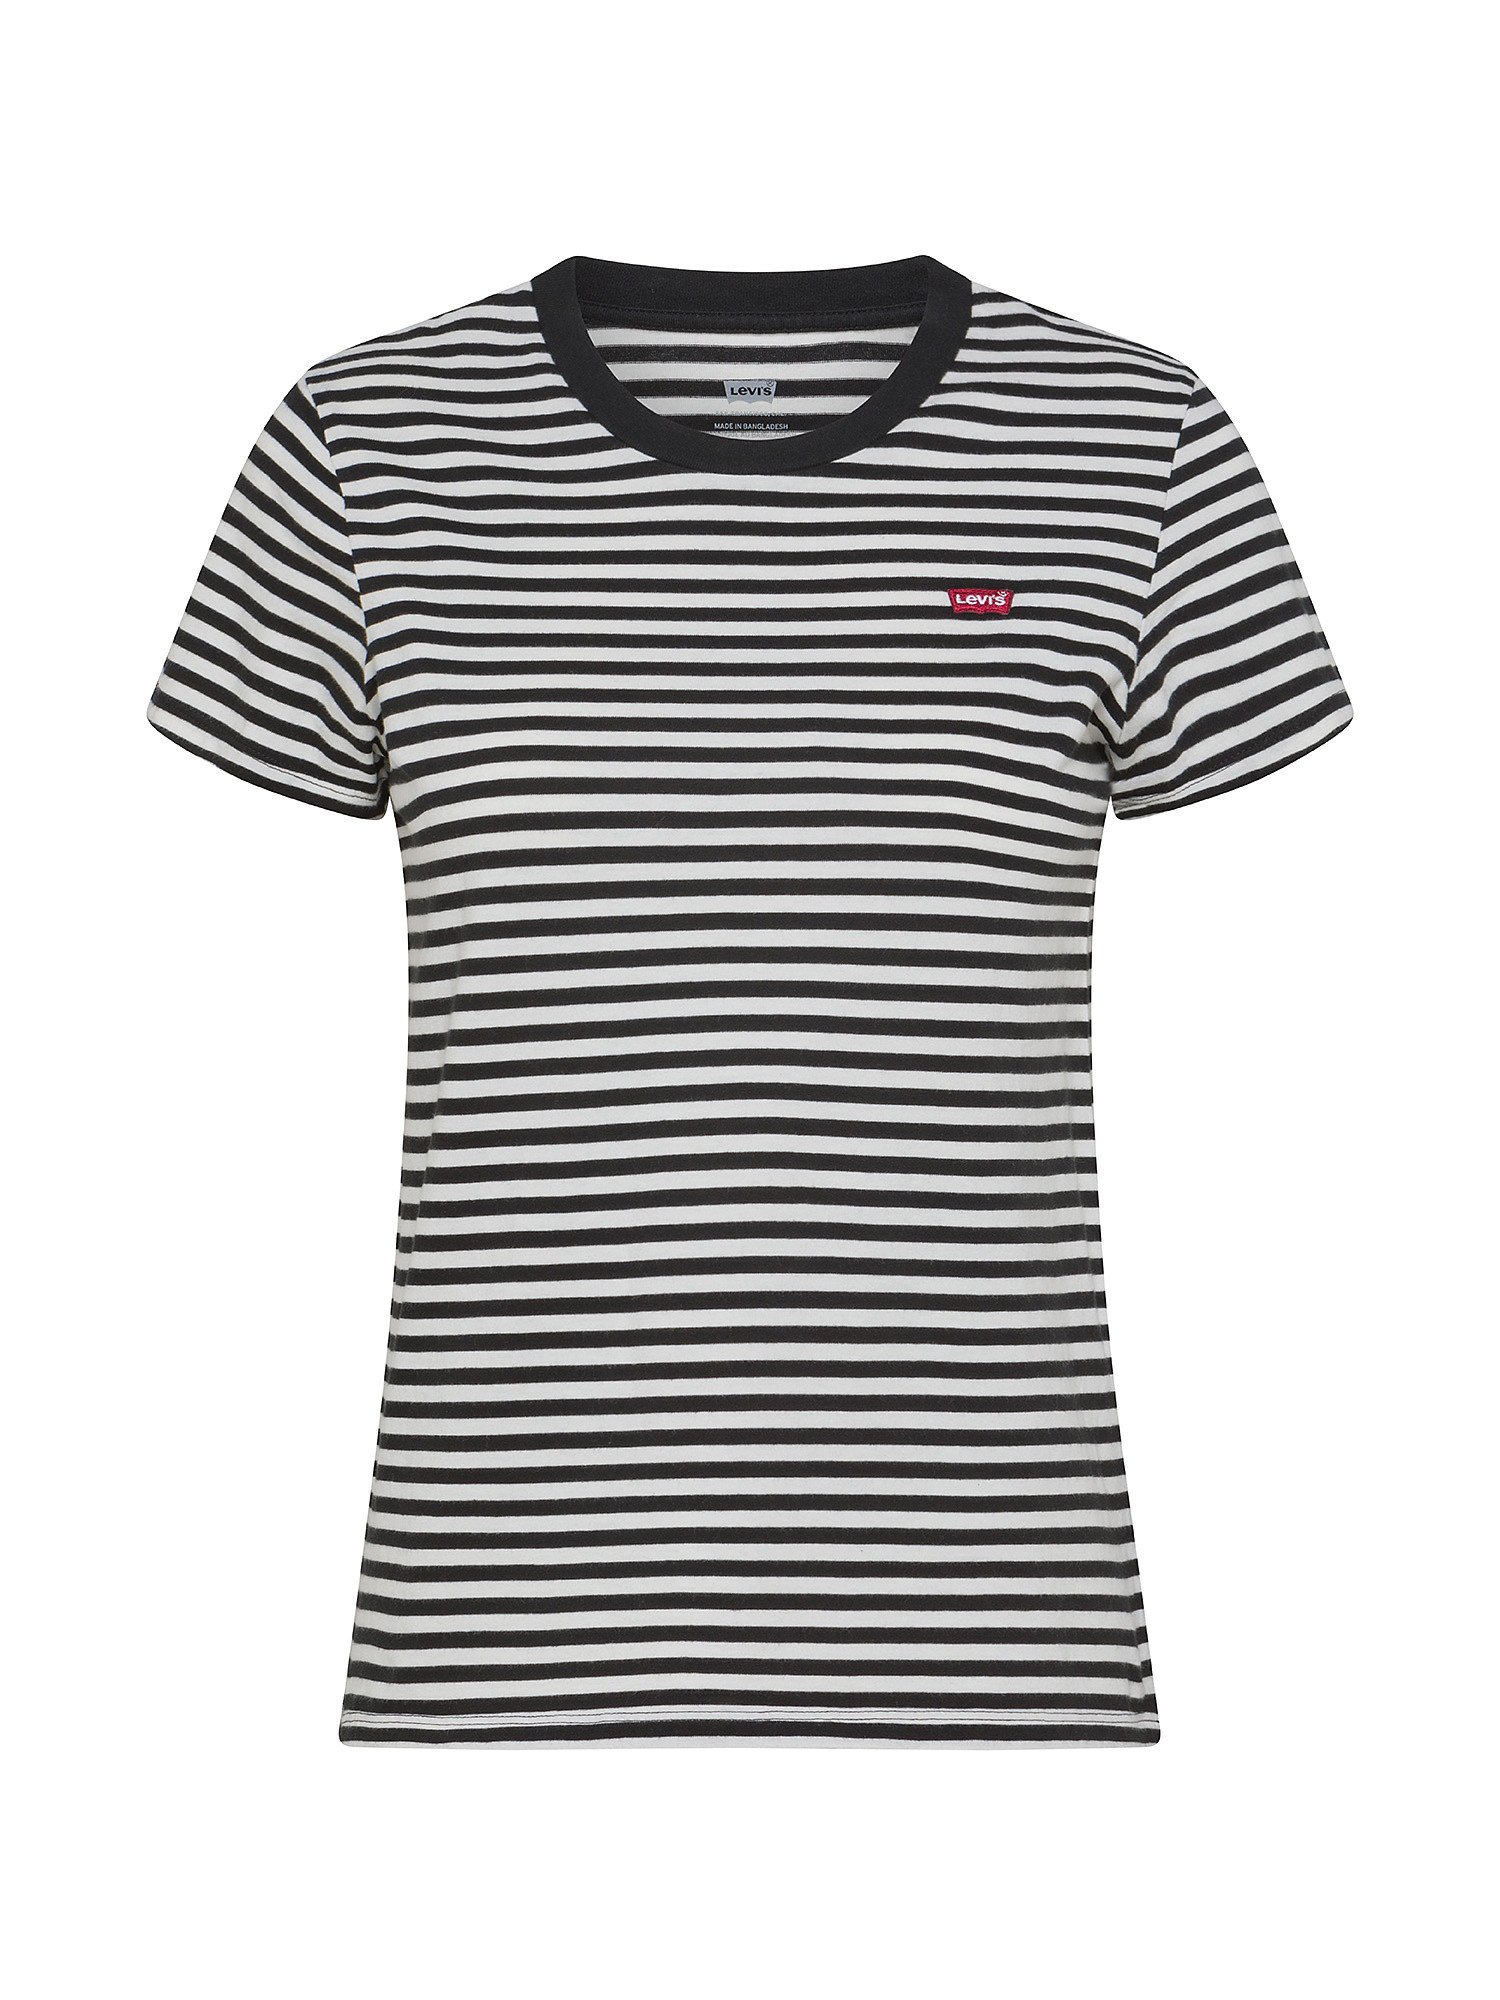 Levi's - Striped T-Shirt, Black, large image number 0